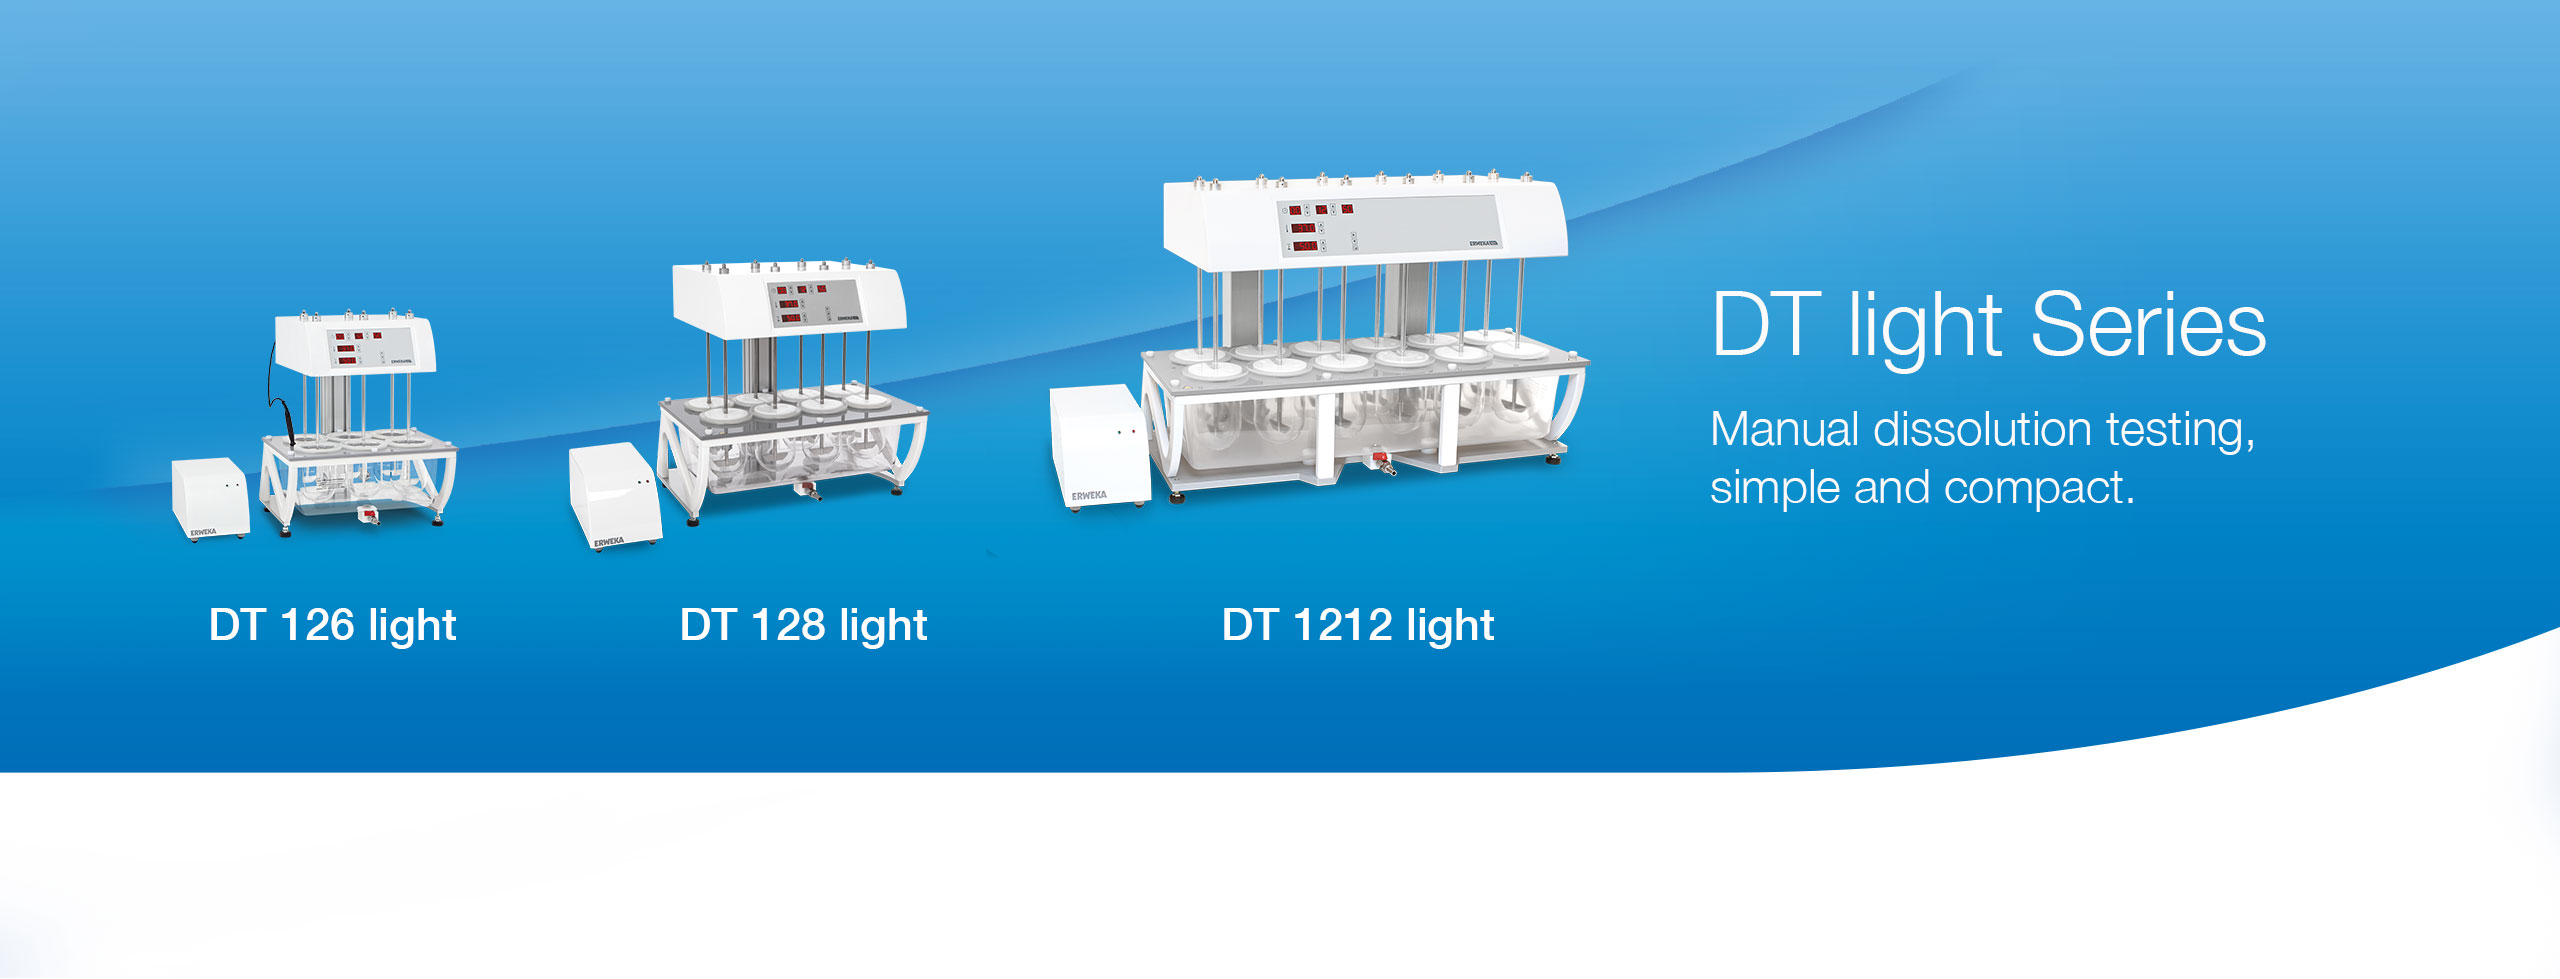 DT light Series